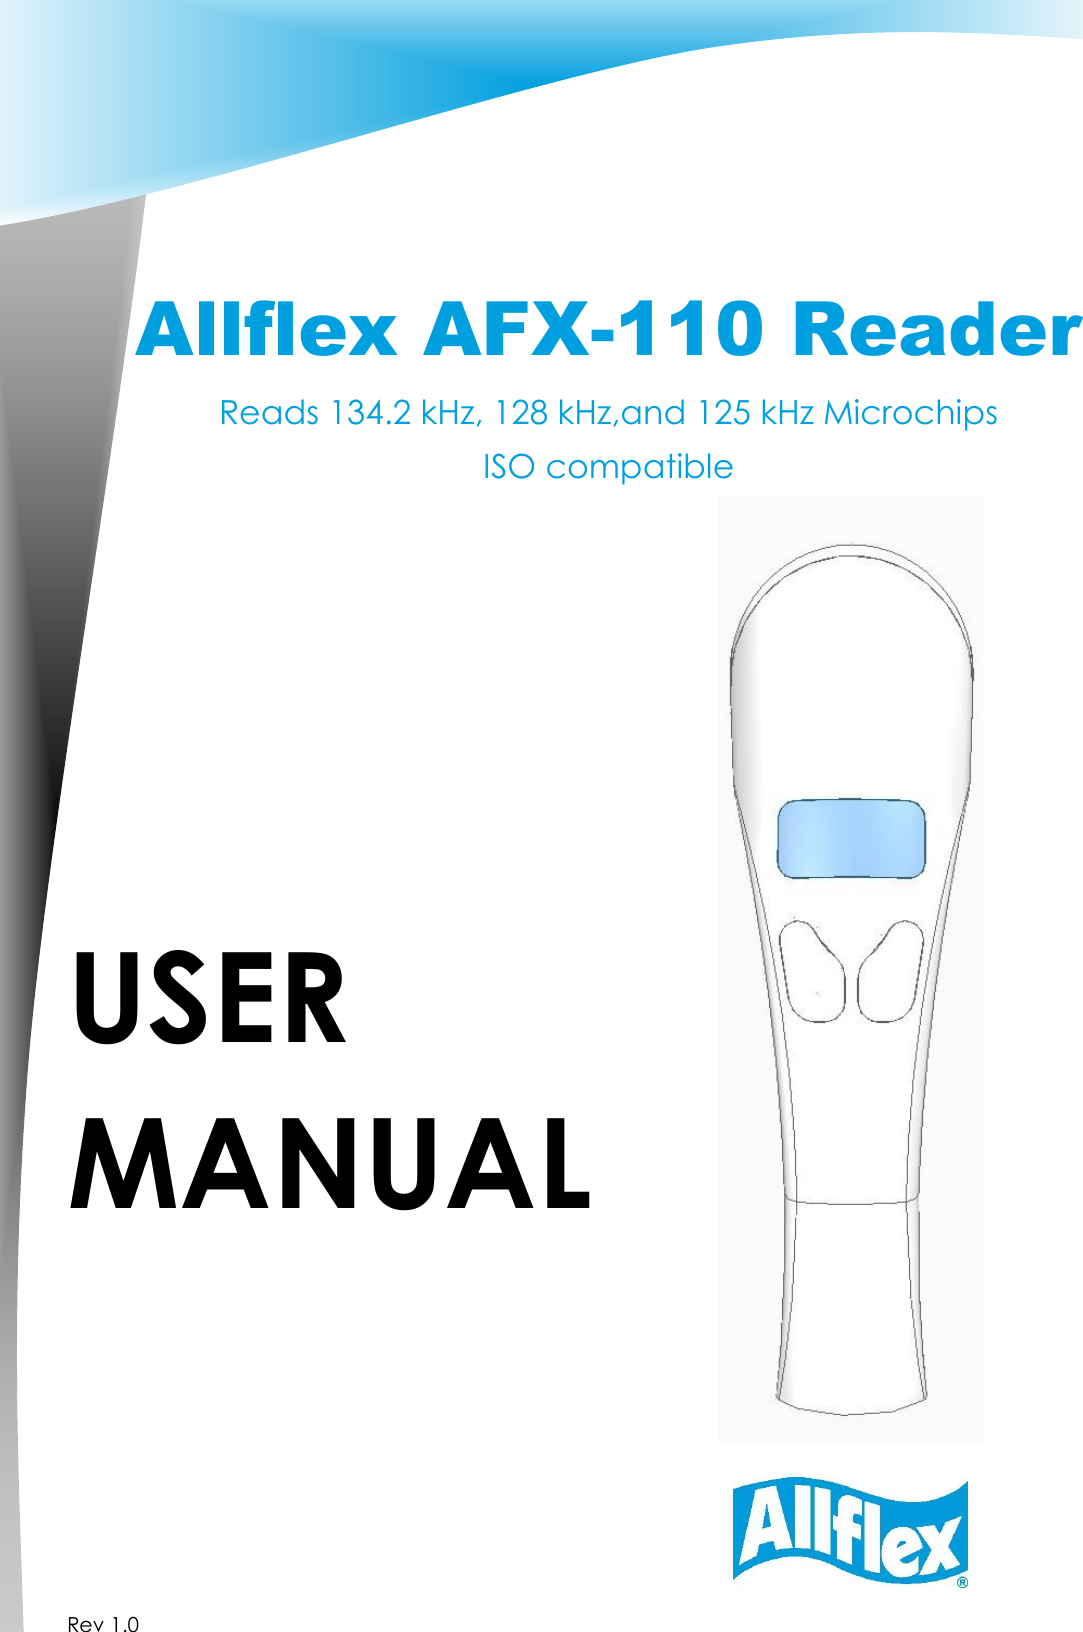 Rev 1.0       Allflex AFX-110 Reader Reads 134.2 kHz, 128 kHz,and 125 kHz Microchips ISO compatible            USER MANUAL  